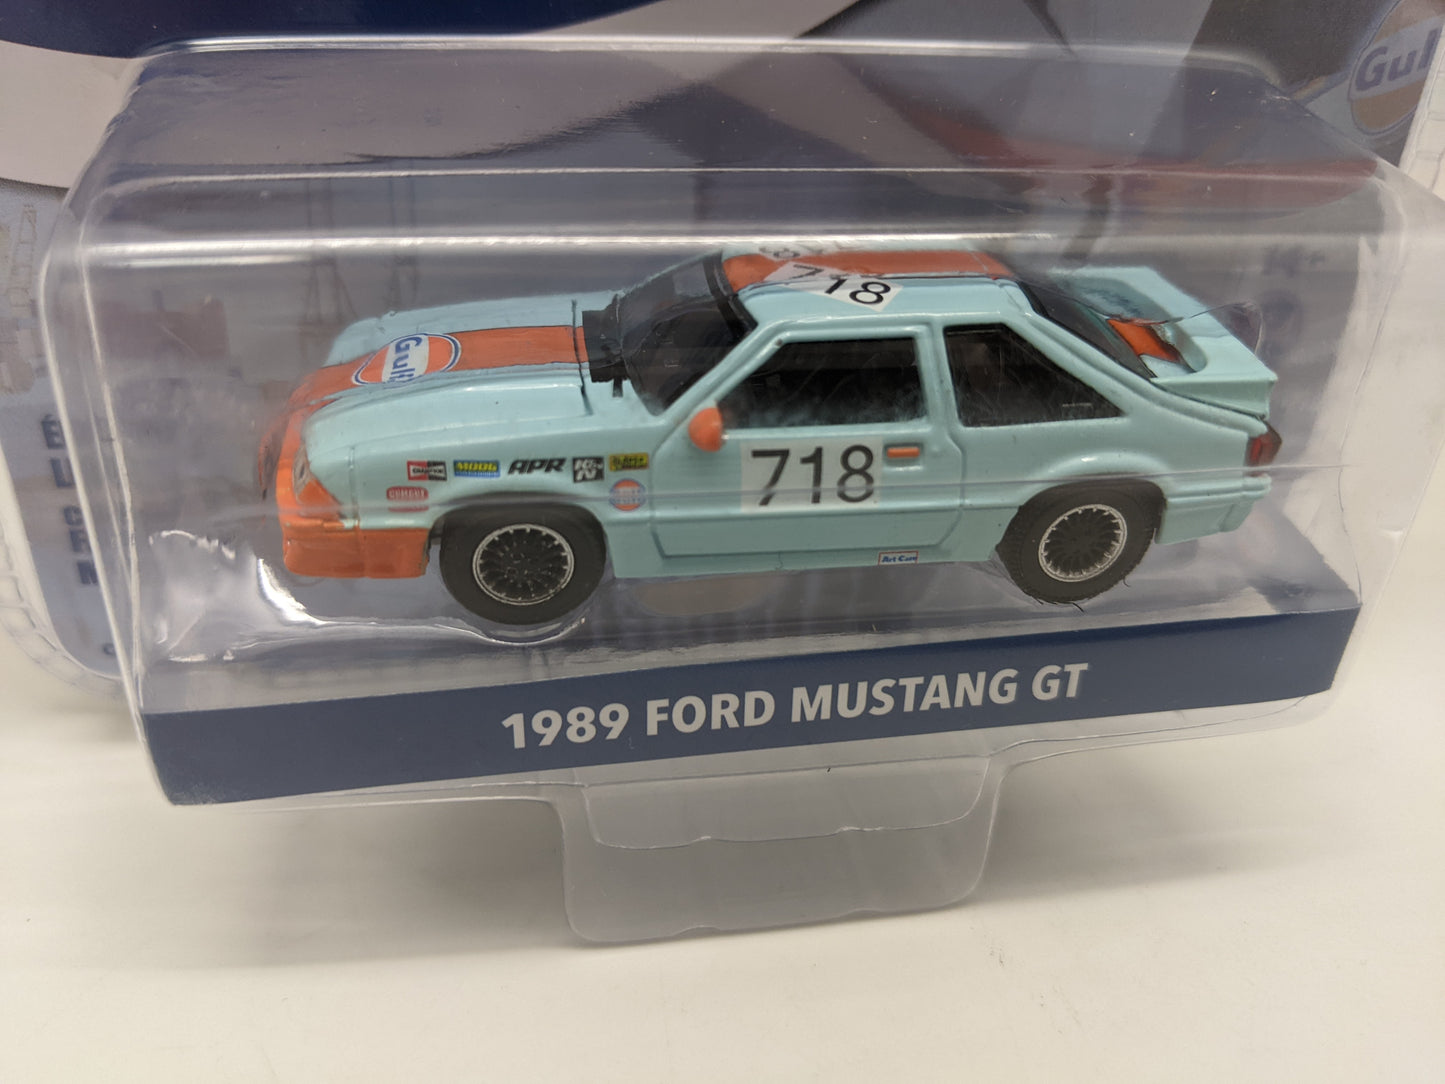 GL - 1989 Ford Mustang GT - GULF